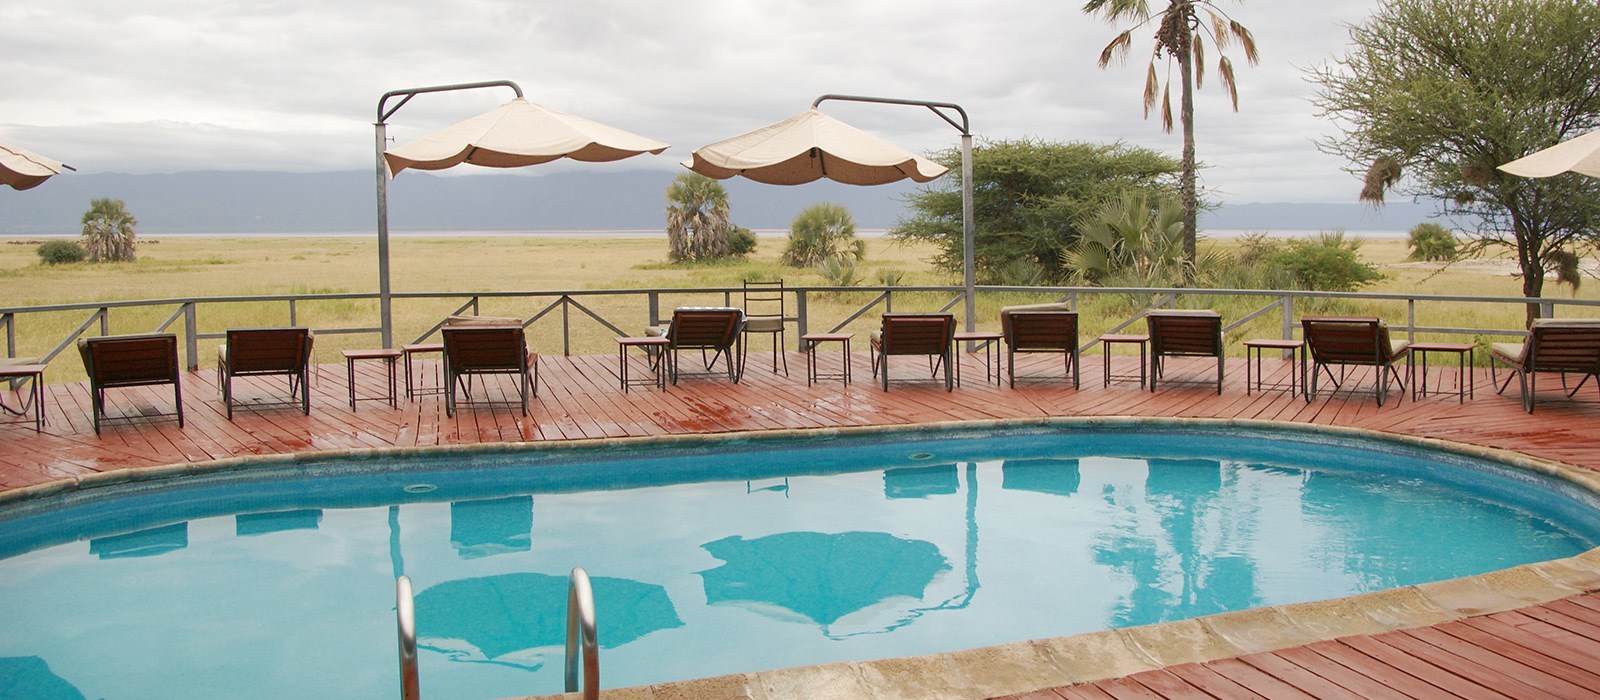 huiswerk maken Laan Baffle Maramboi Tented Lodge Hotel in Tanzania | ENCHANTING TRAVELS